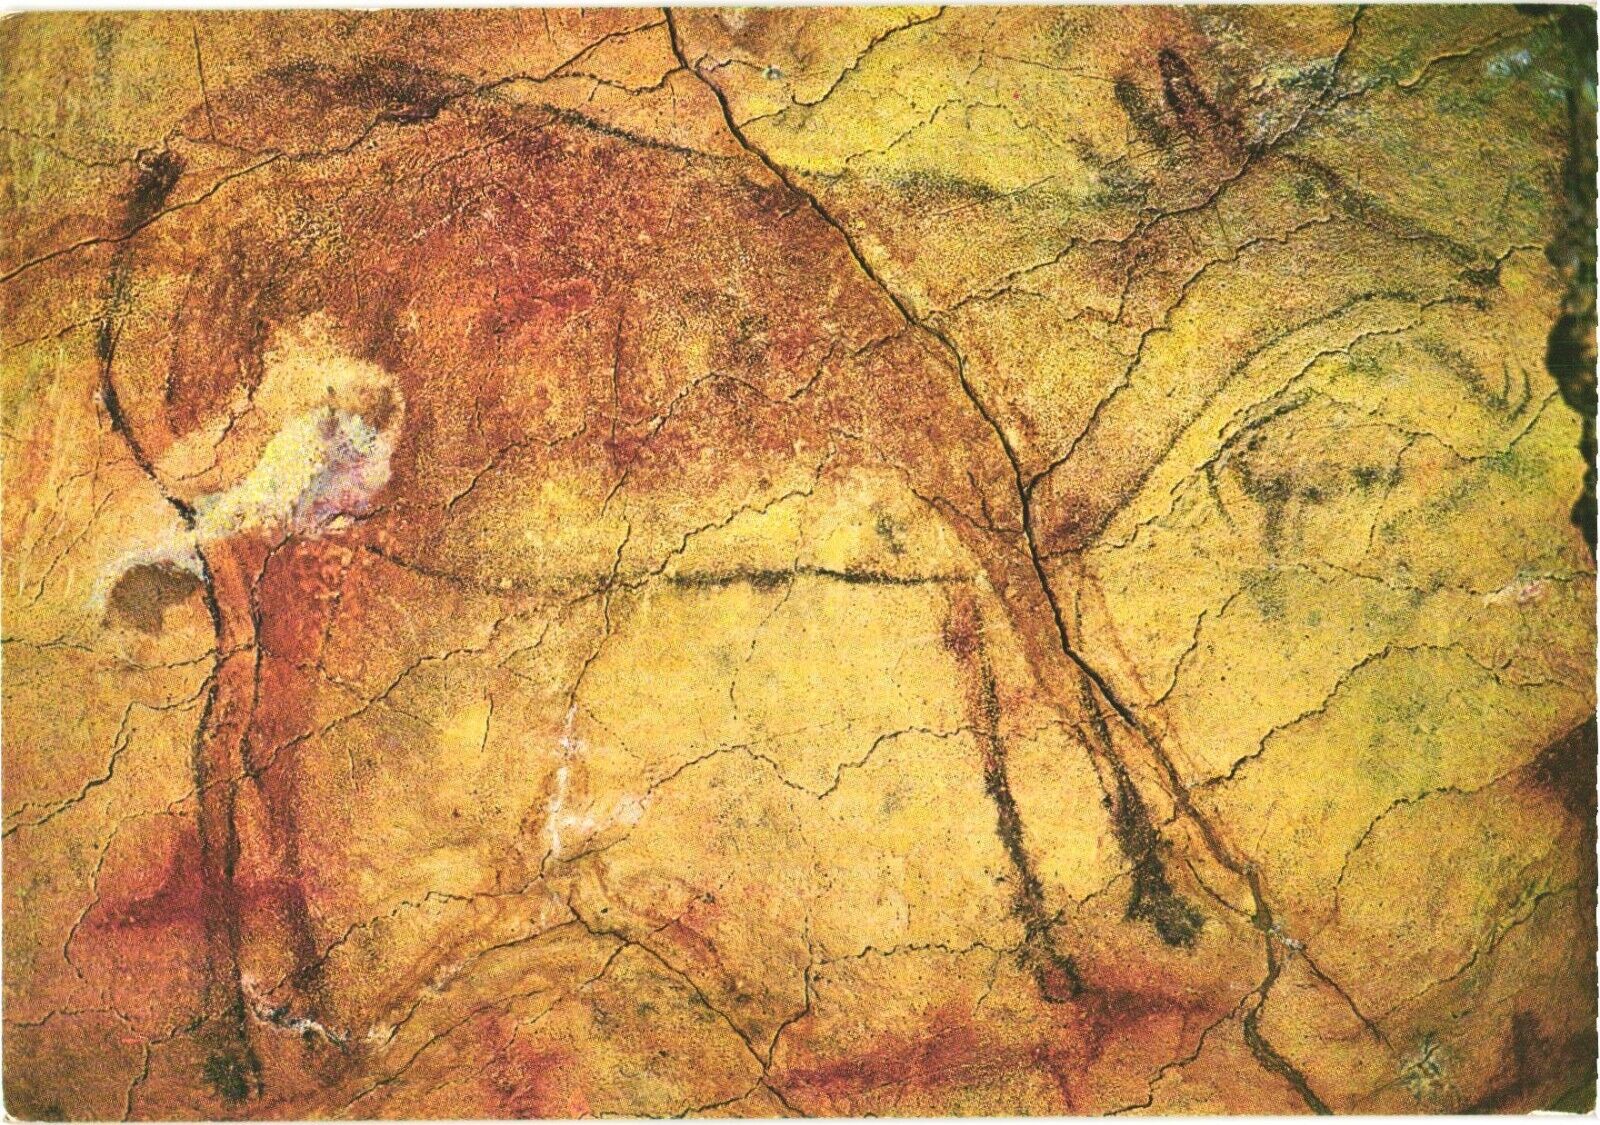 Santillana del Mar in Cantabria Spain Cave of Altamira Cave Paintings Postcard